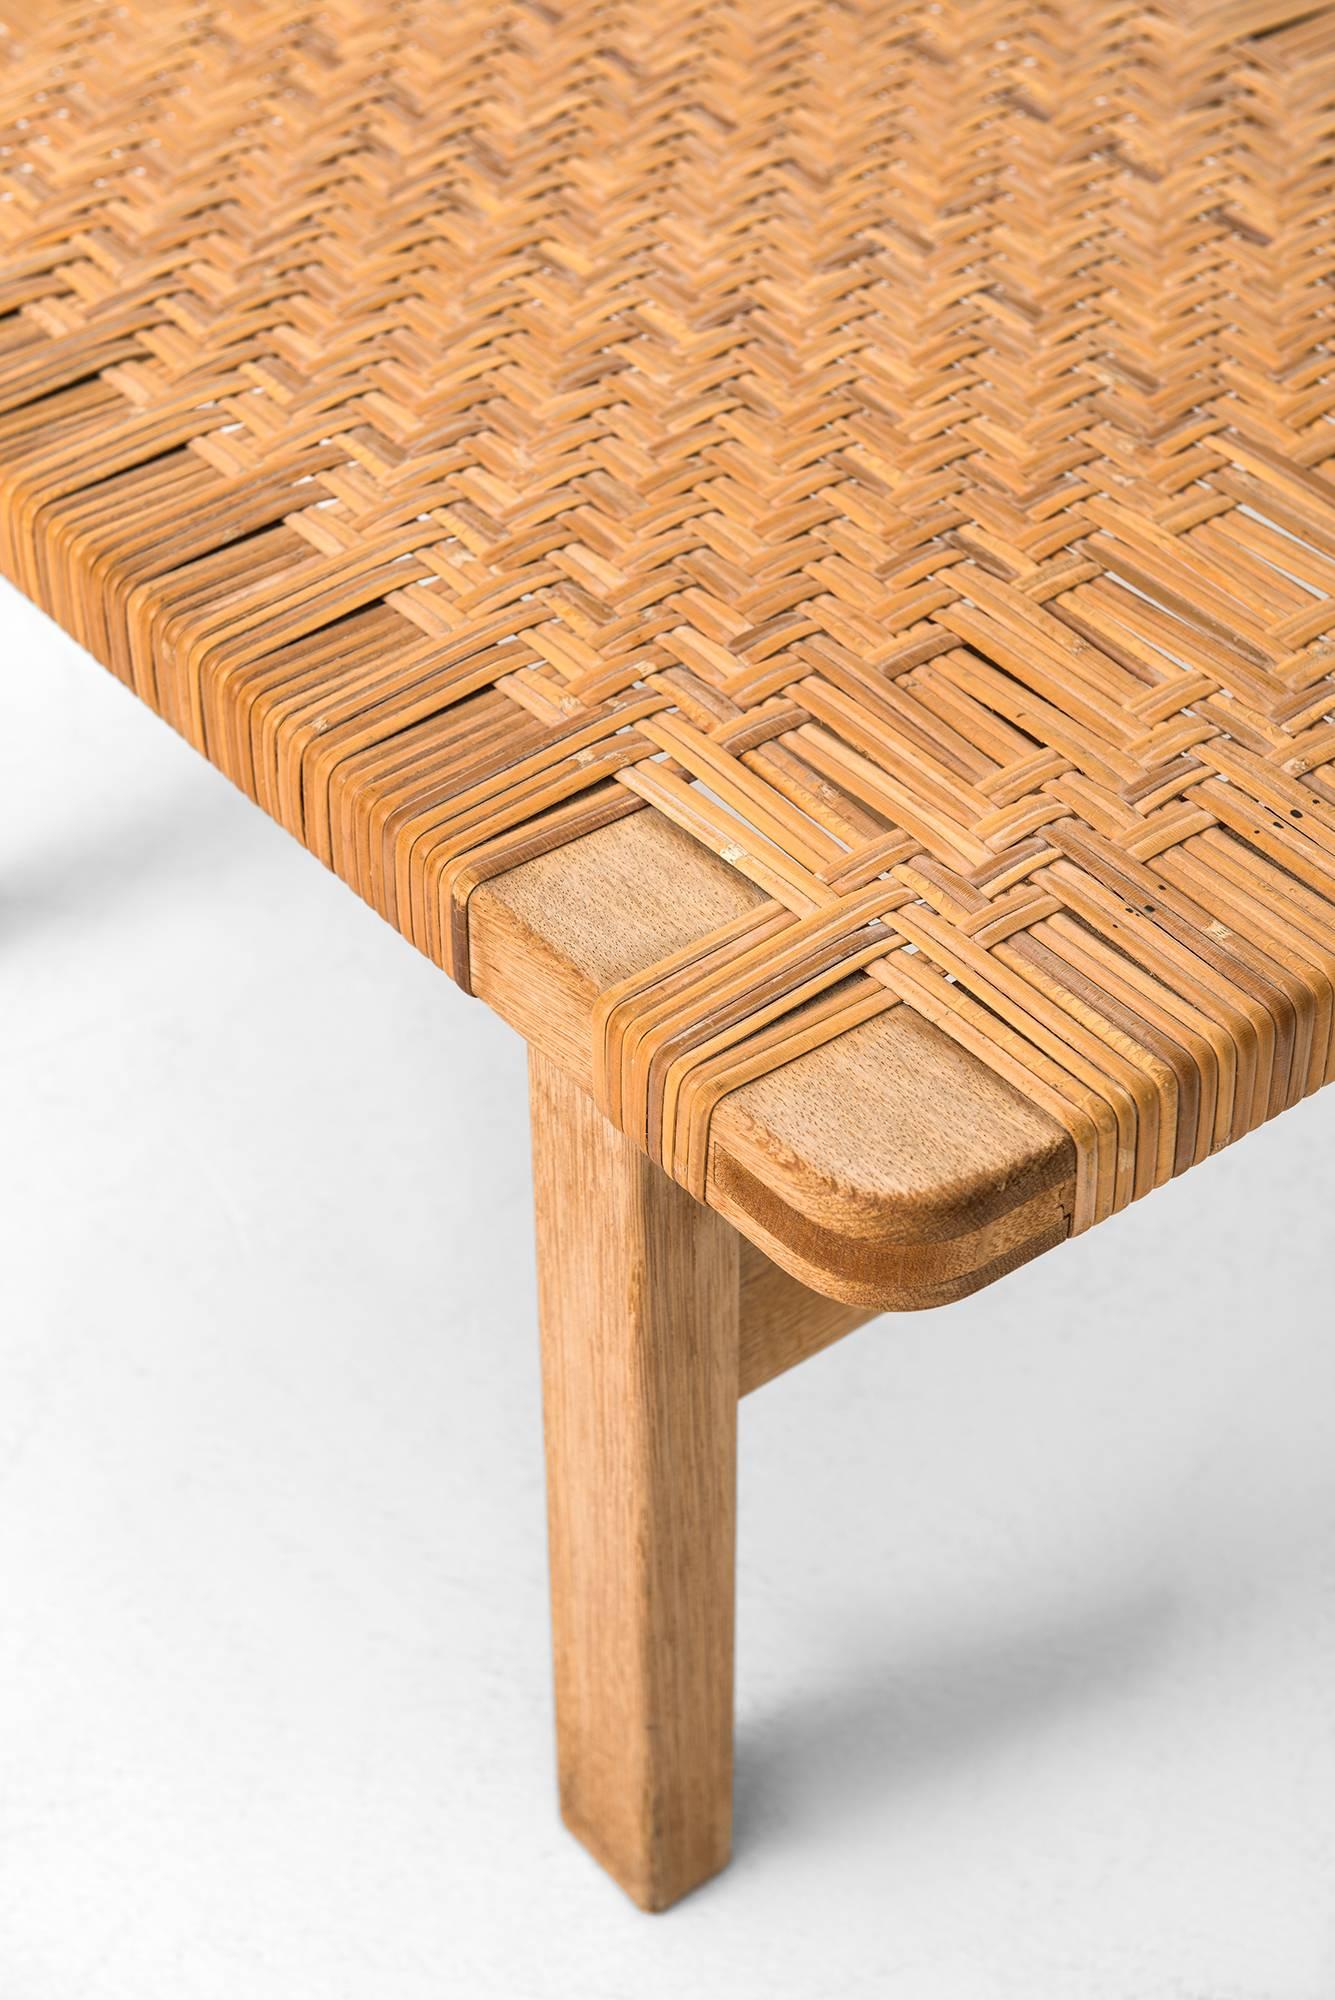 Børge Mogensen Side Table by Fredericia Stolefabrik in Denmark 1